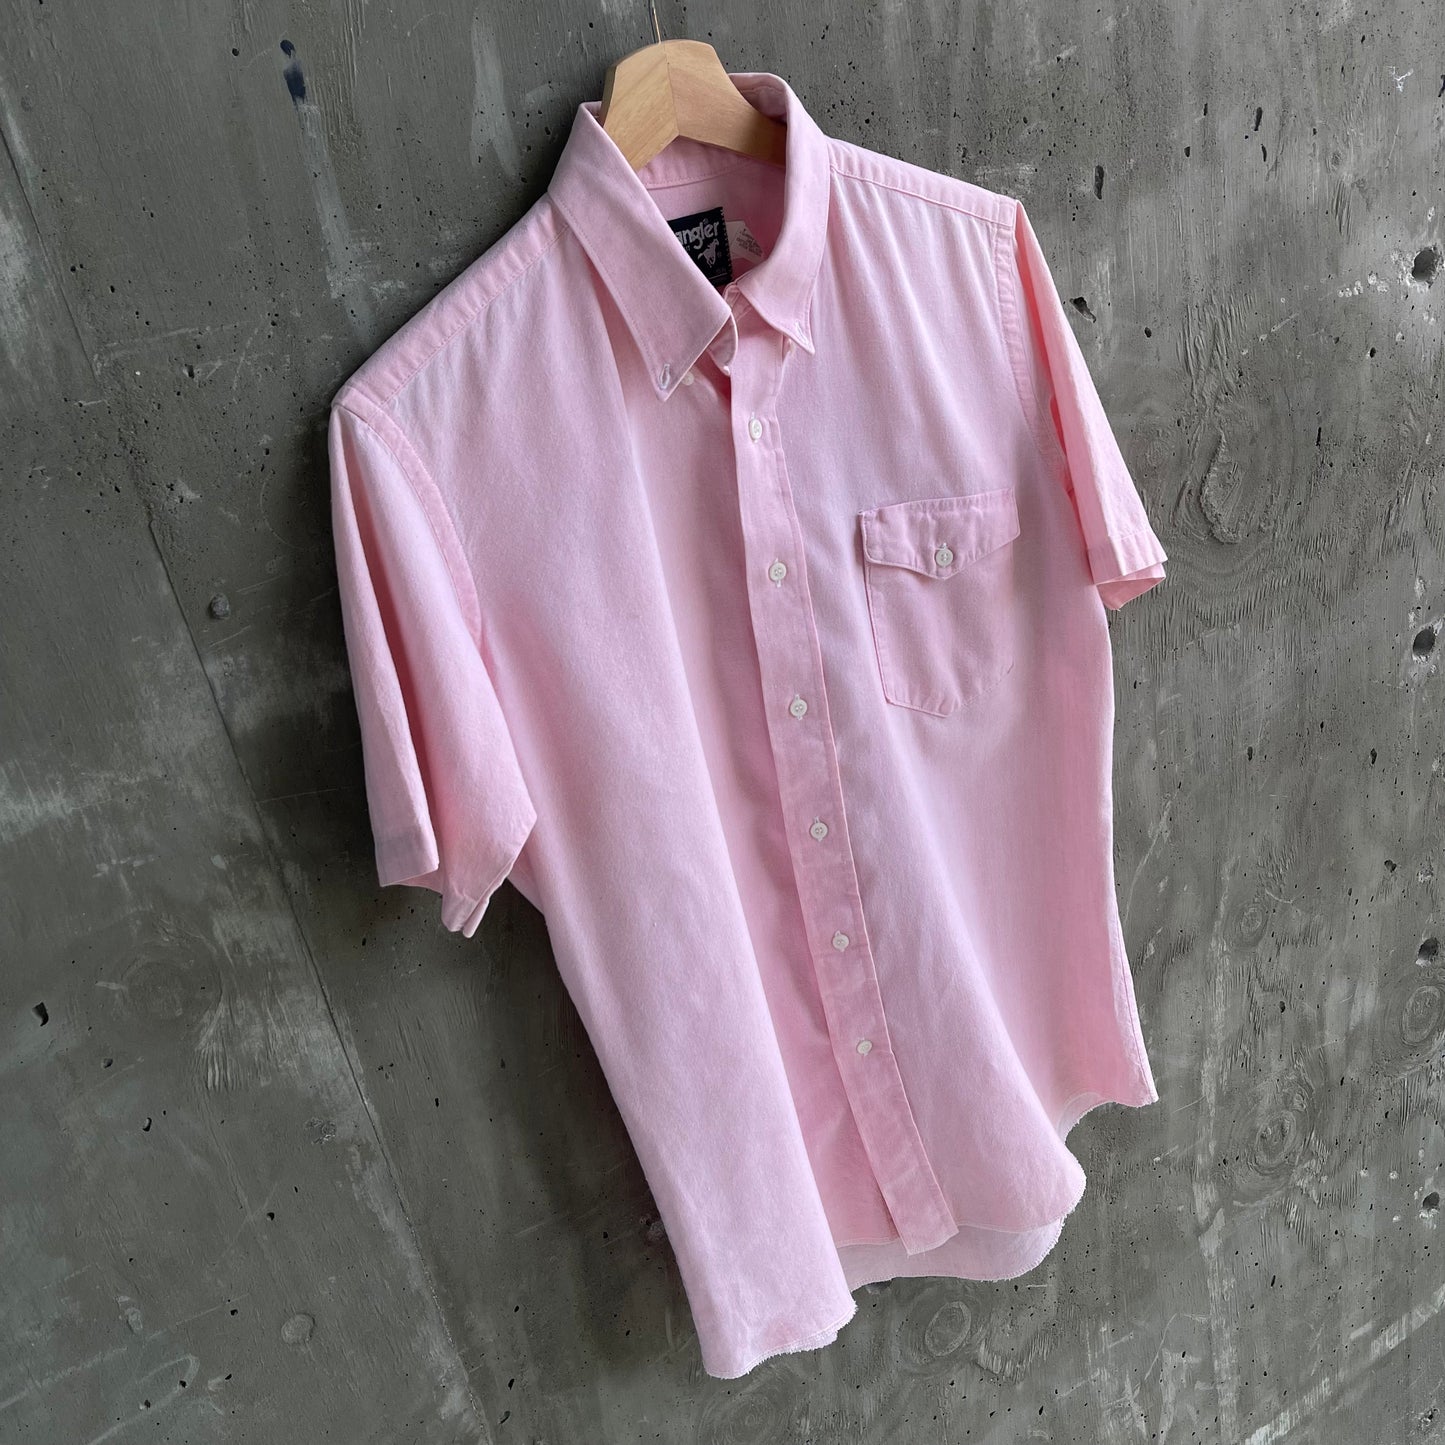 Vintage 80’s Wrangler Cowboy Cut Top in Pink